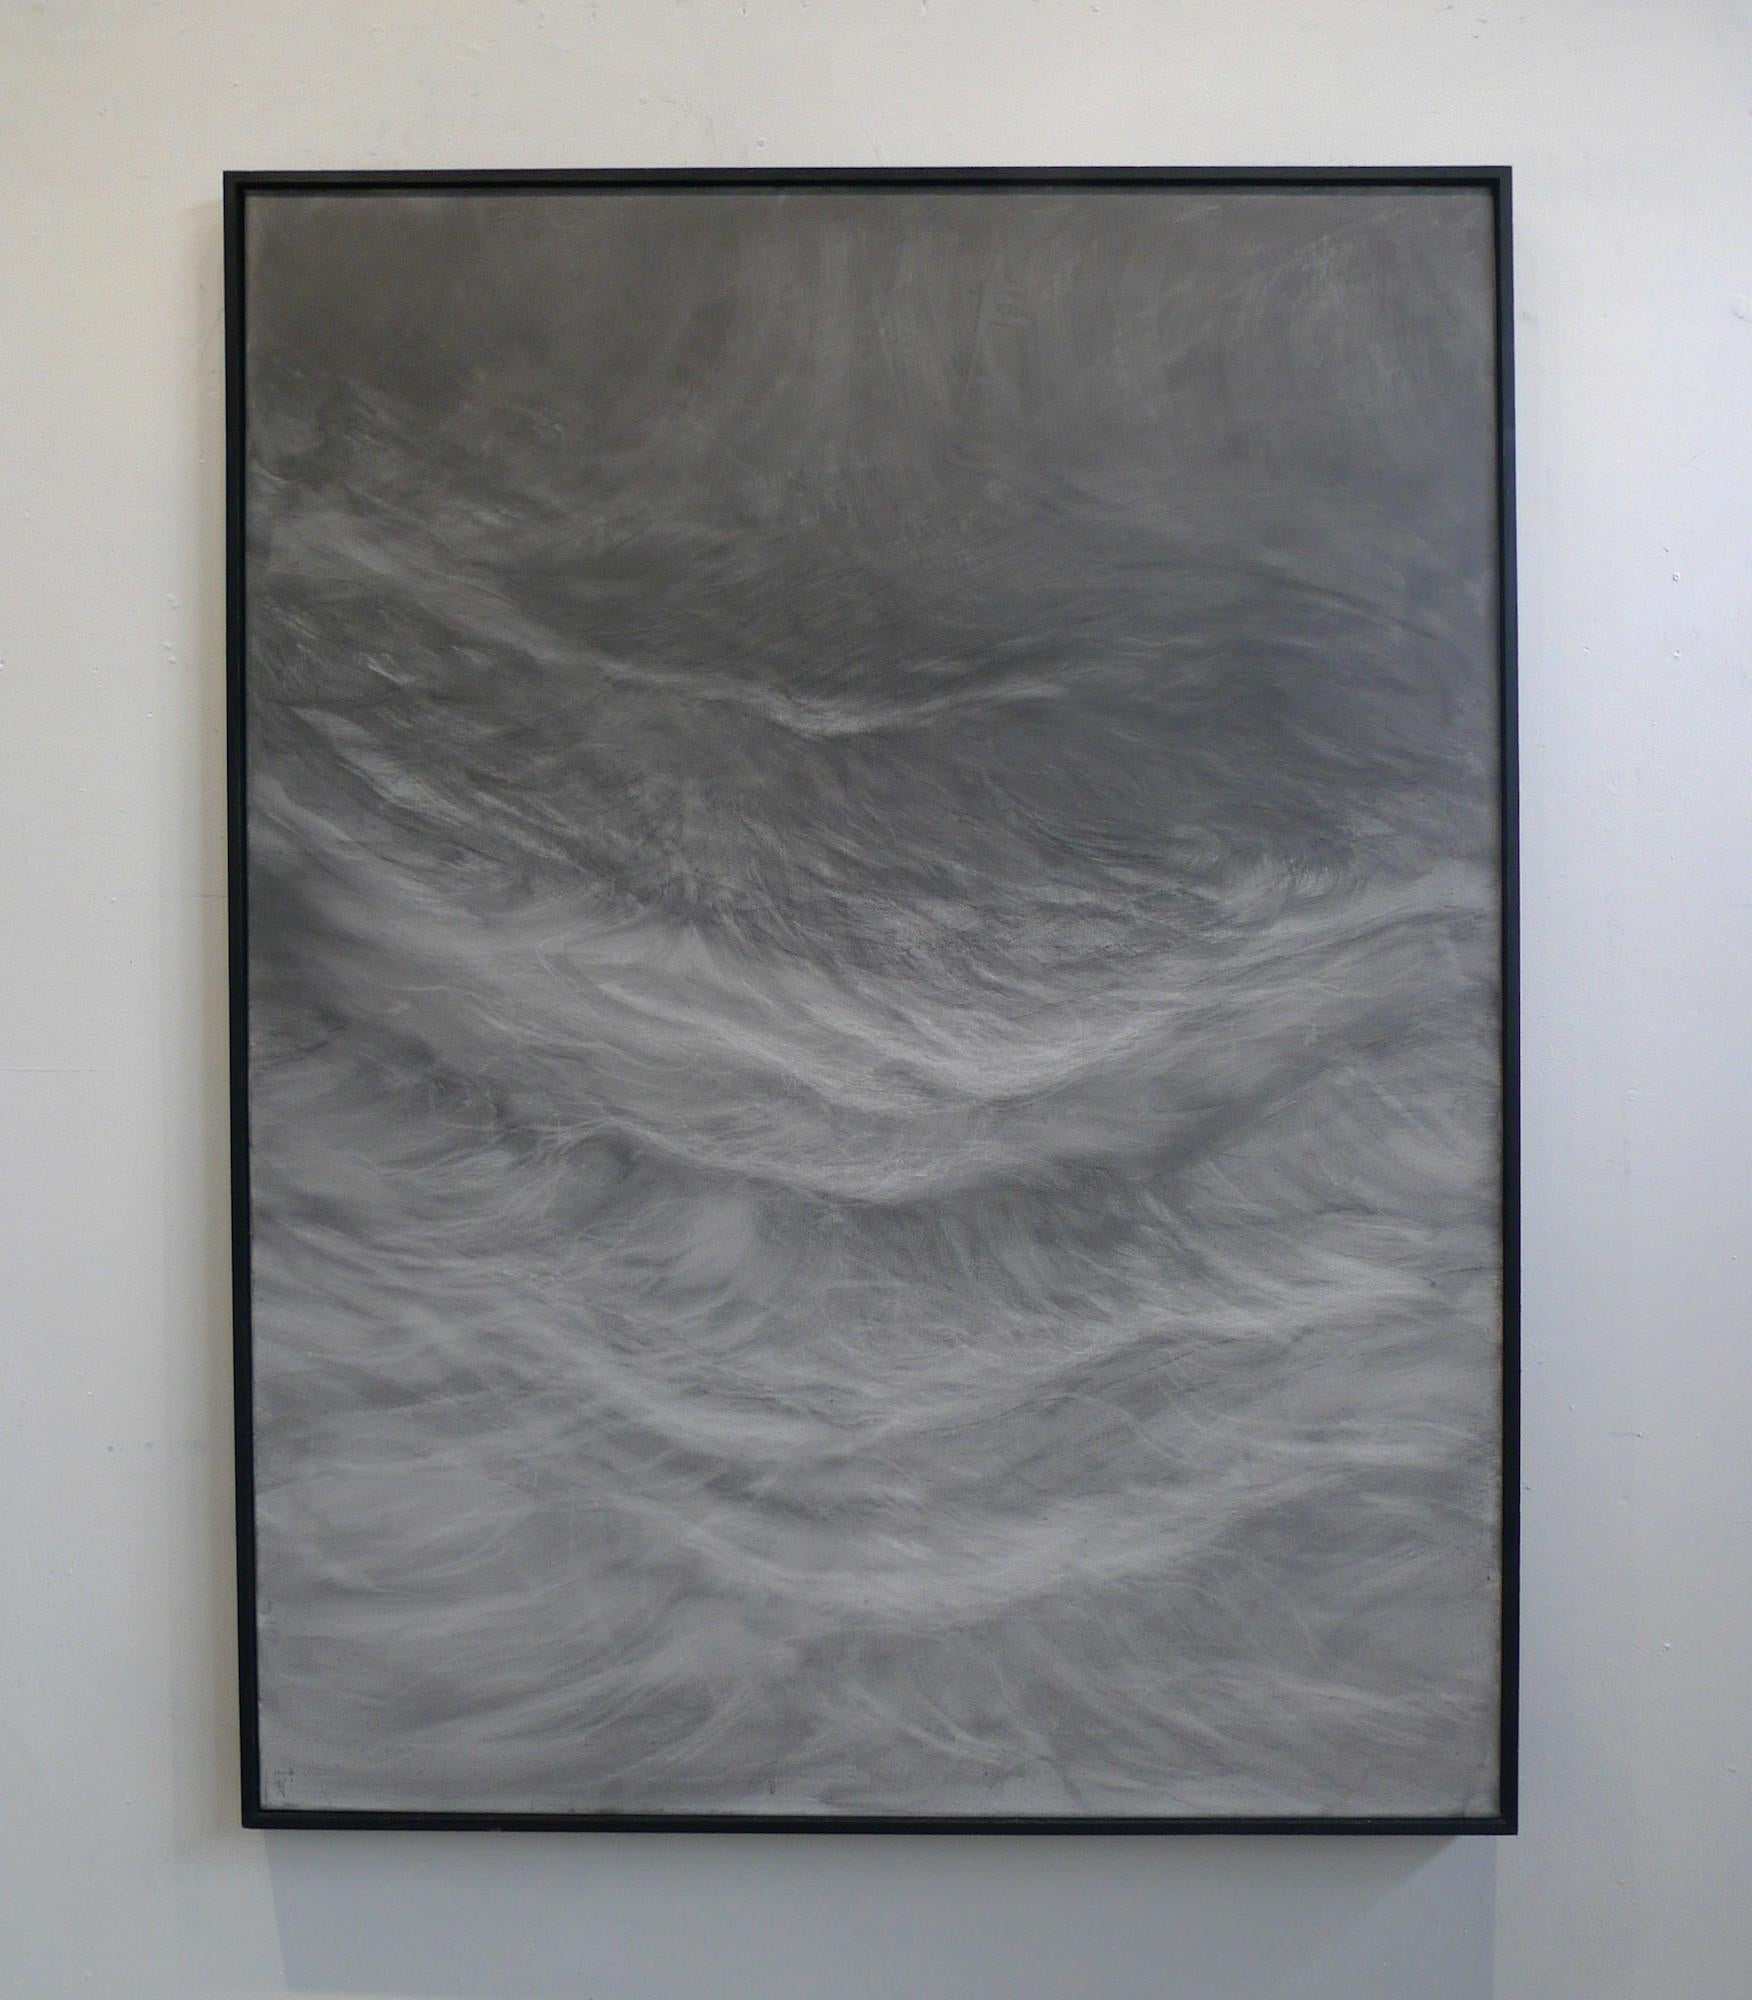 Waves by Franco Salas Borquez - Contemporary seascape painting, ocean, dark tone For Sale 1